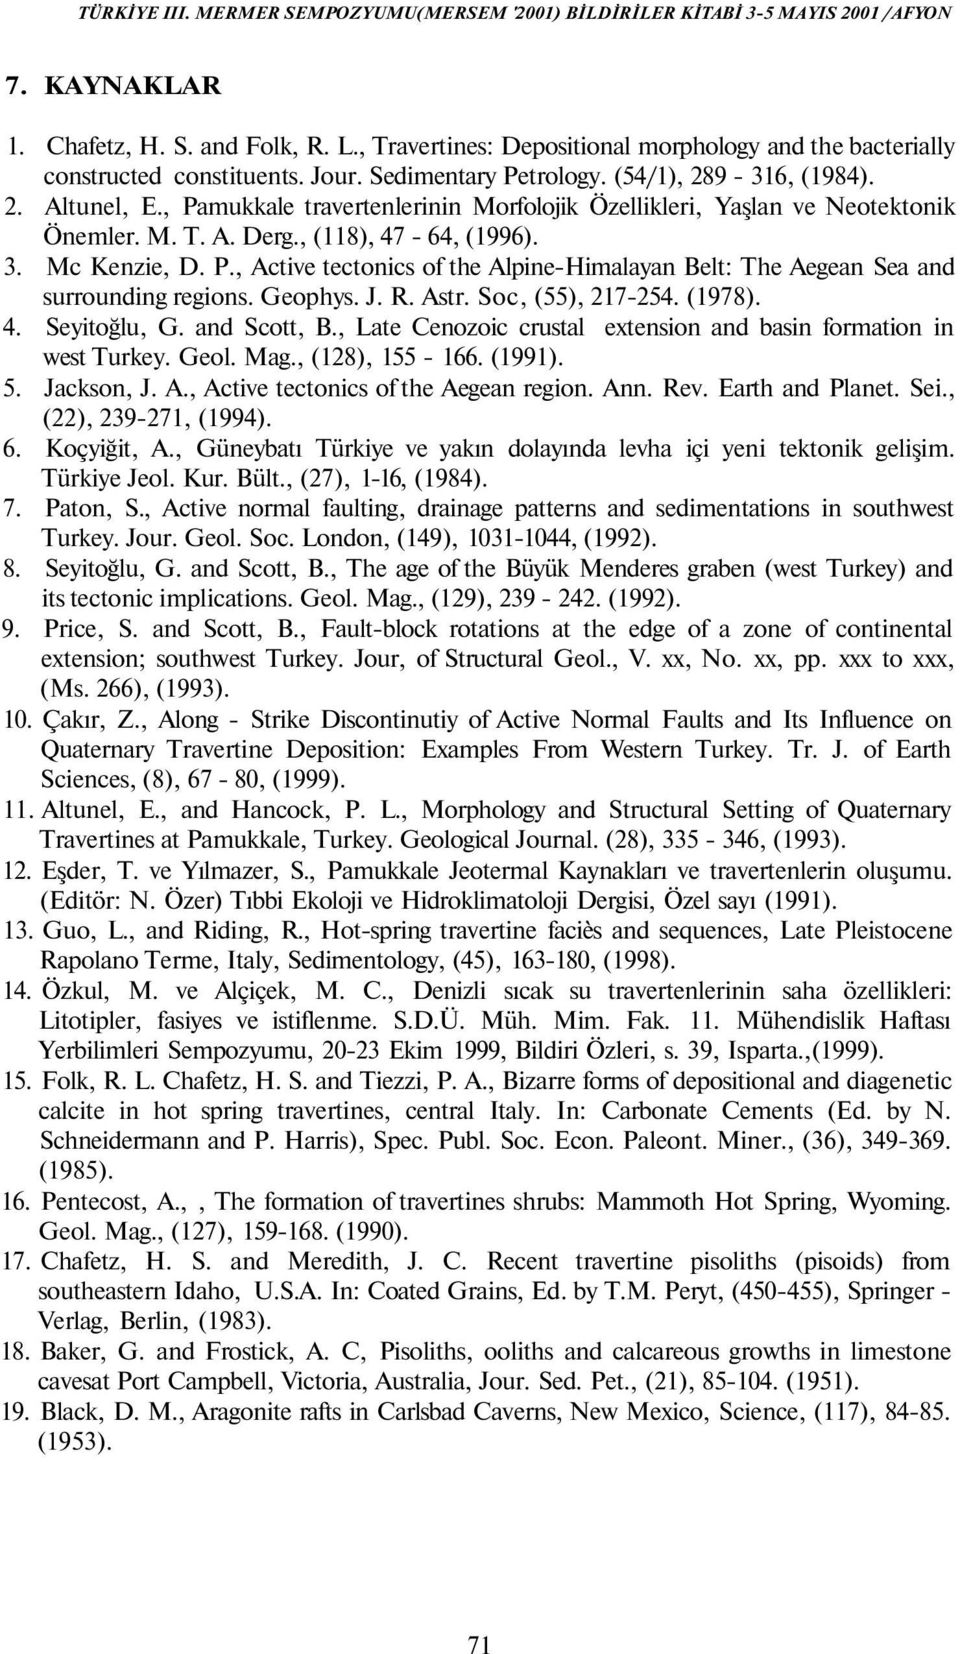 Geophys. J. R. Astr. Soc, (55), 217-254. (1978). 4. Seyitoğlu, G. and Scott, B., Late Cenozoic crustal extension and basin formation in west Turkey. Geol. Mag., (128), 155-166. (1991). 5. Jackson, J.